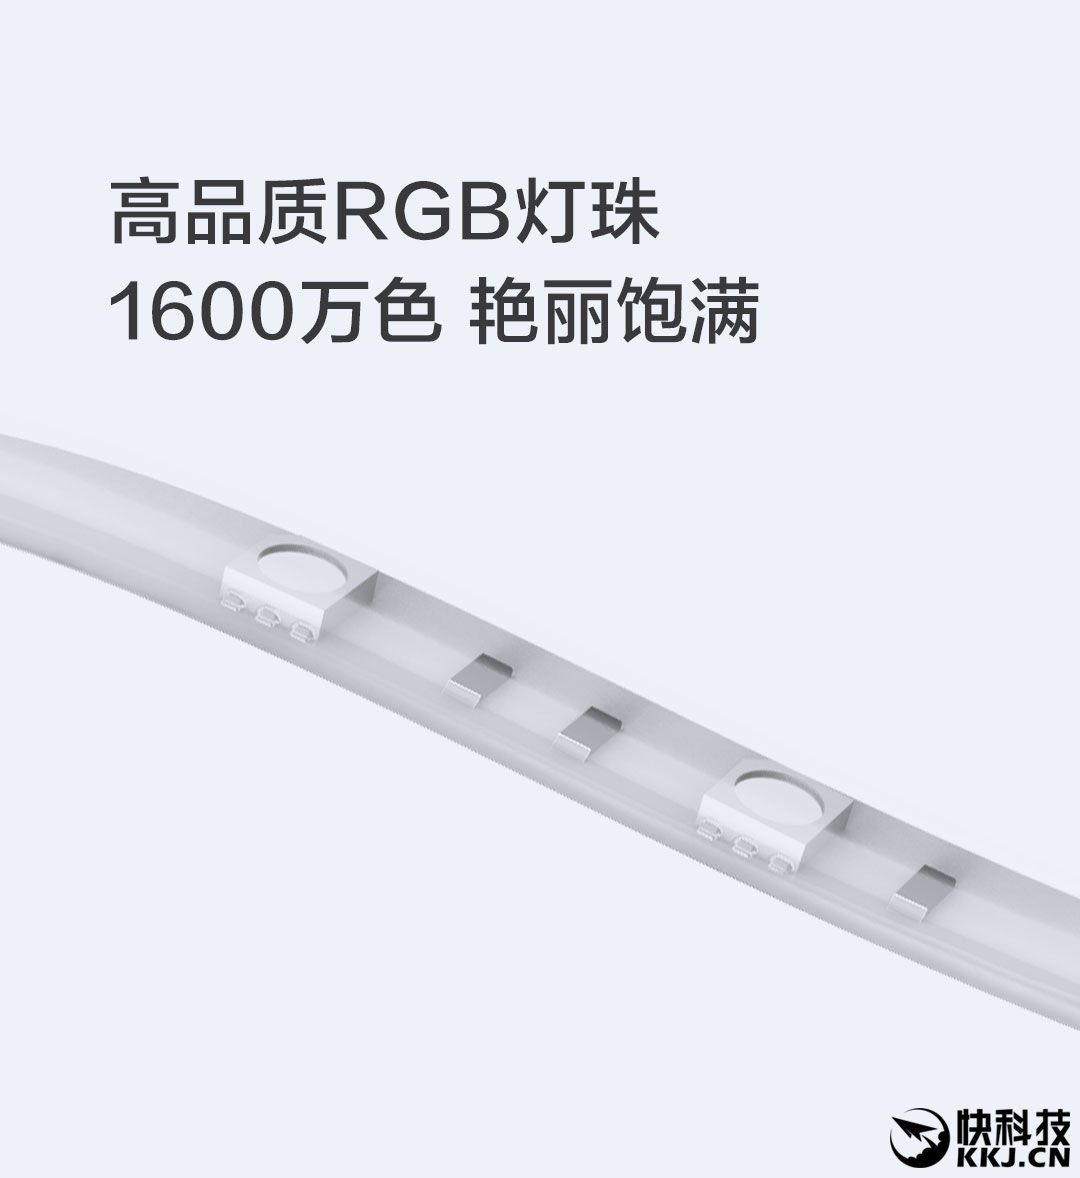 Xiaomi Yeelight Phototherapy